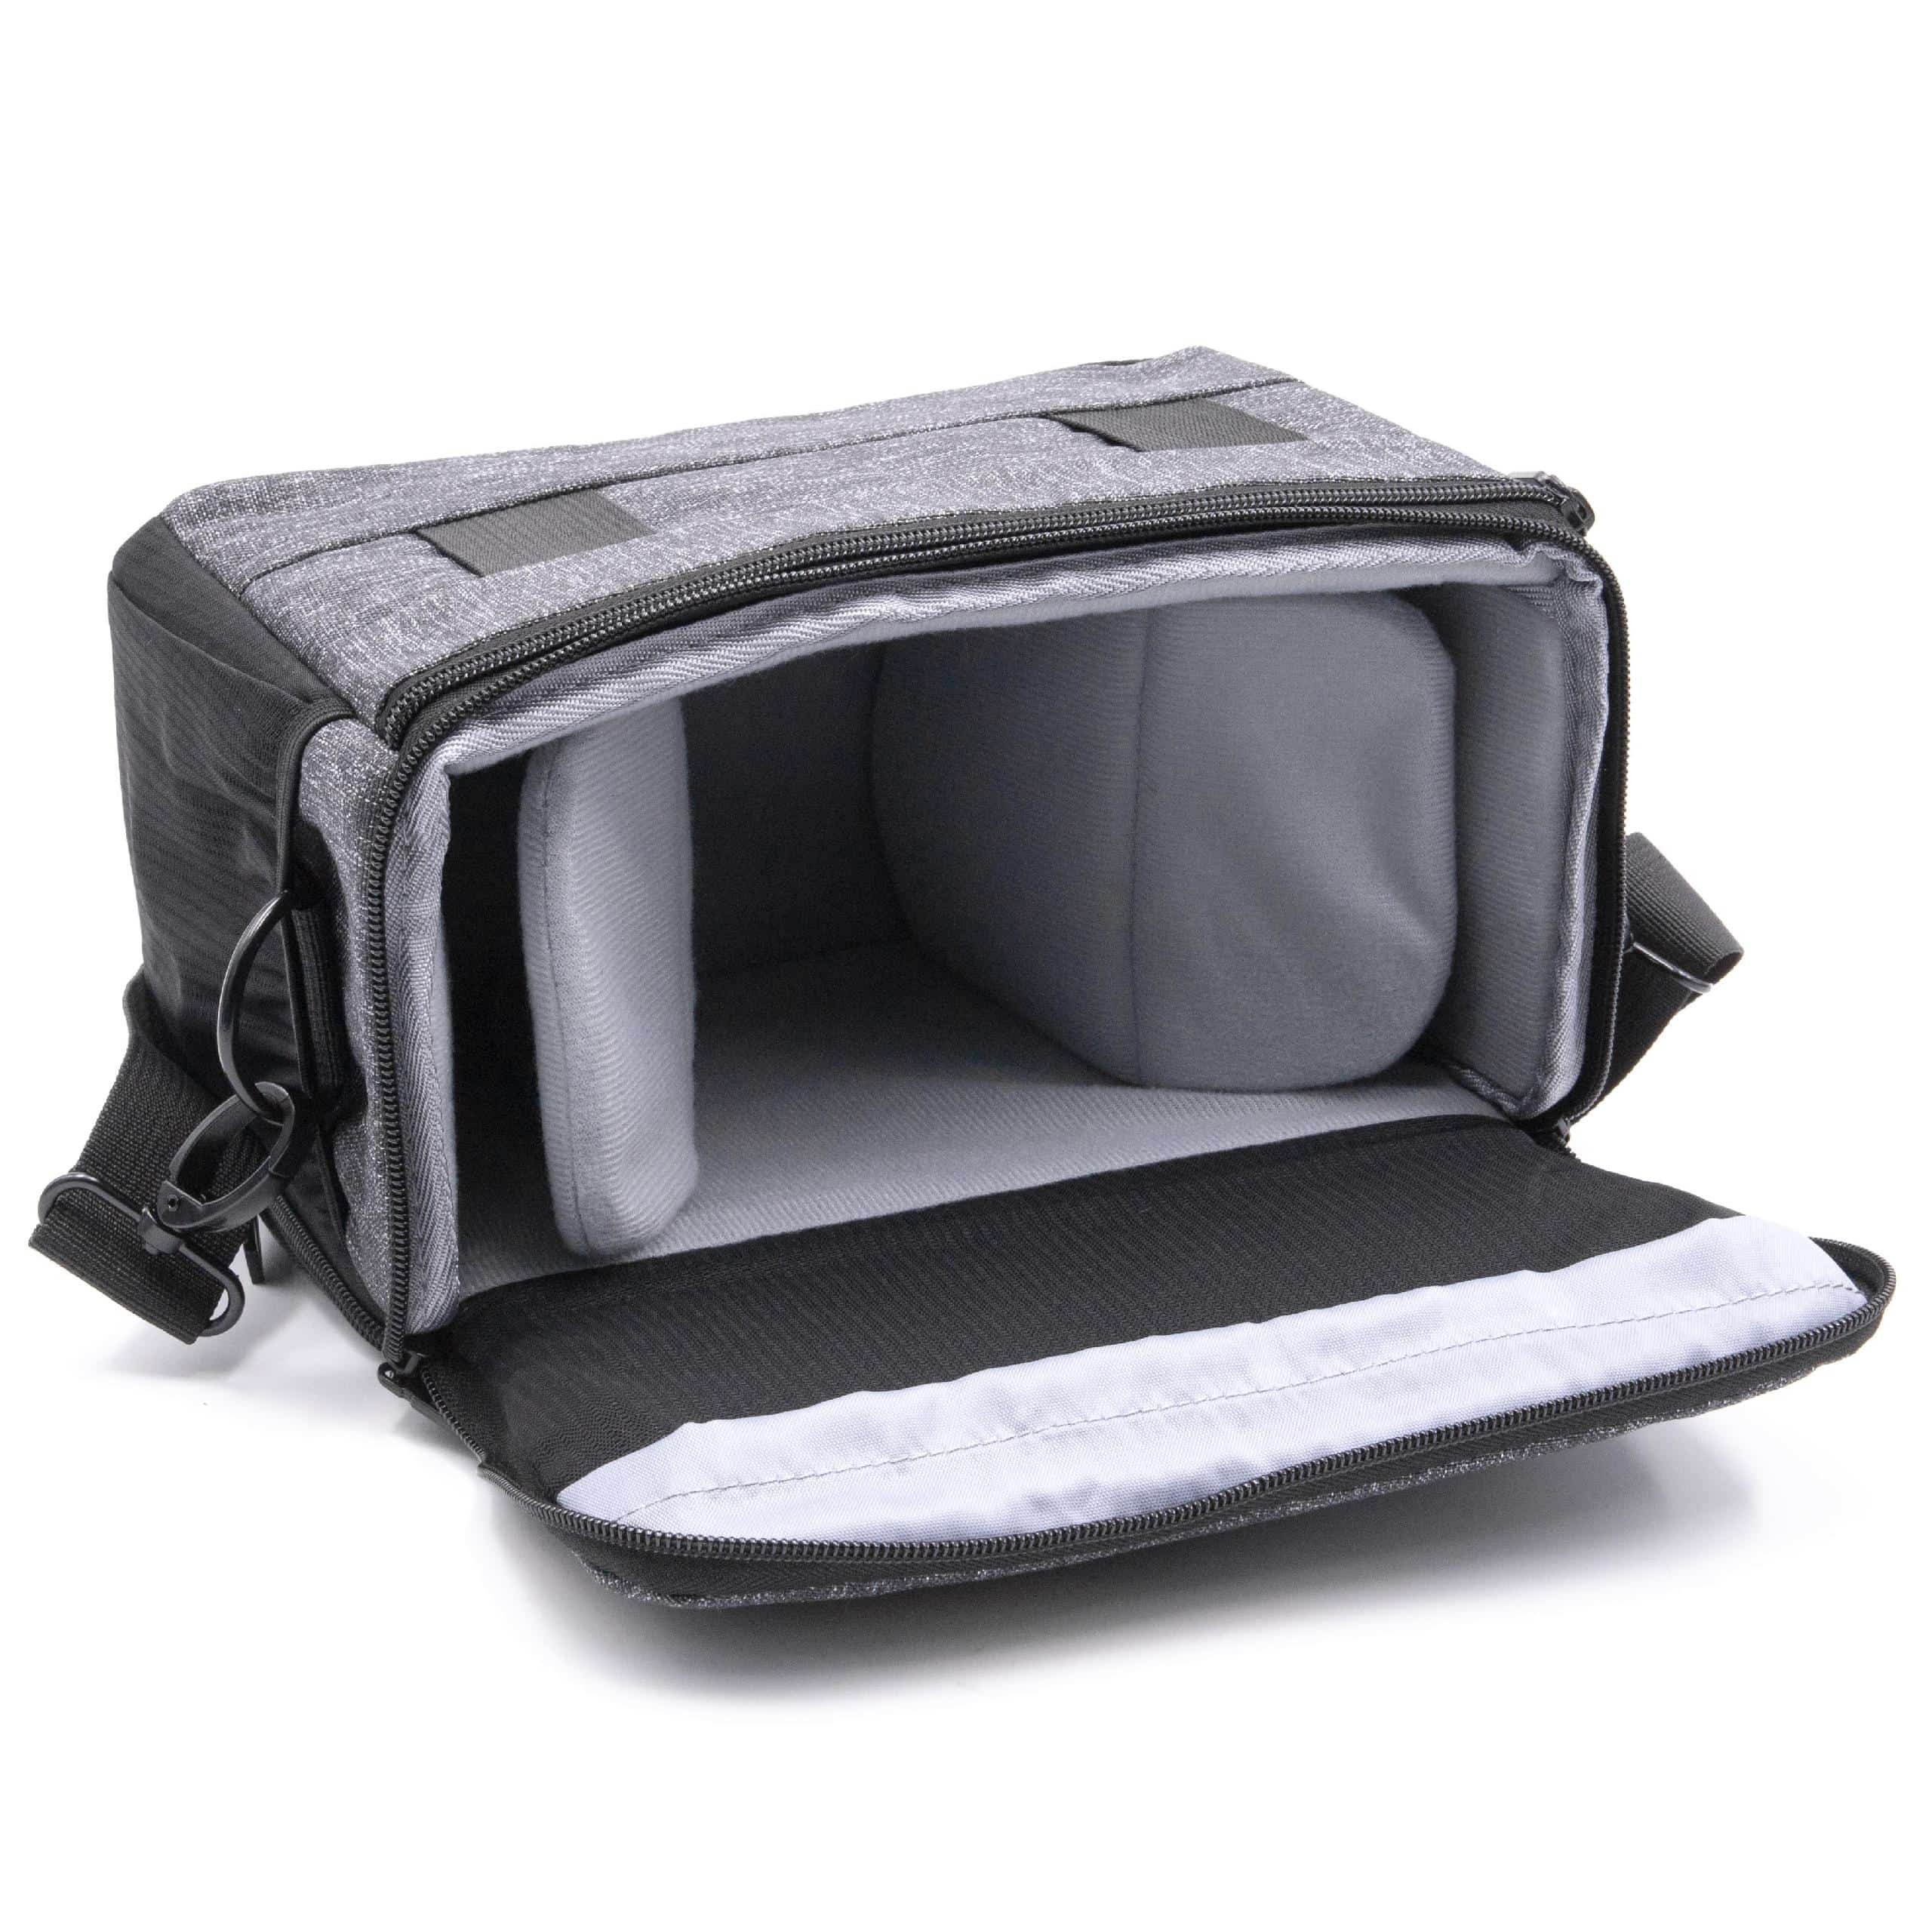 Cámara bolsa - forro interior suave / lona, negro / gris - 260 x 195 x 150mm para